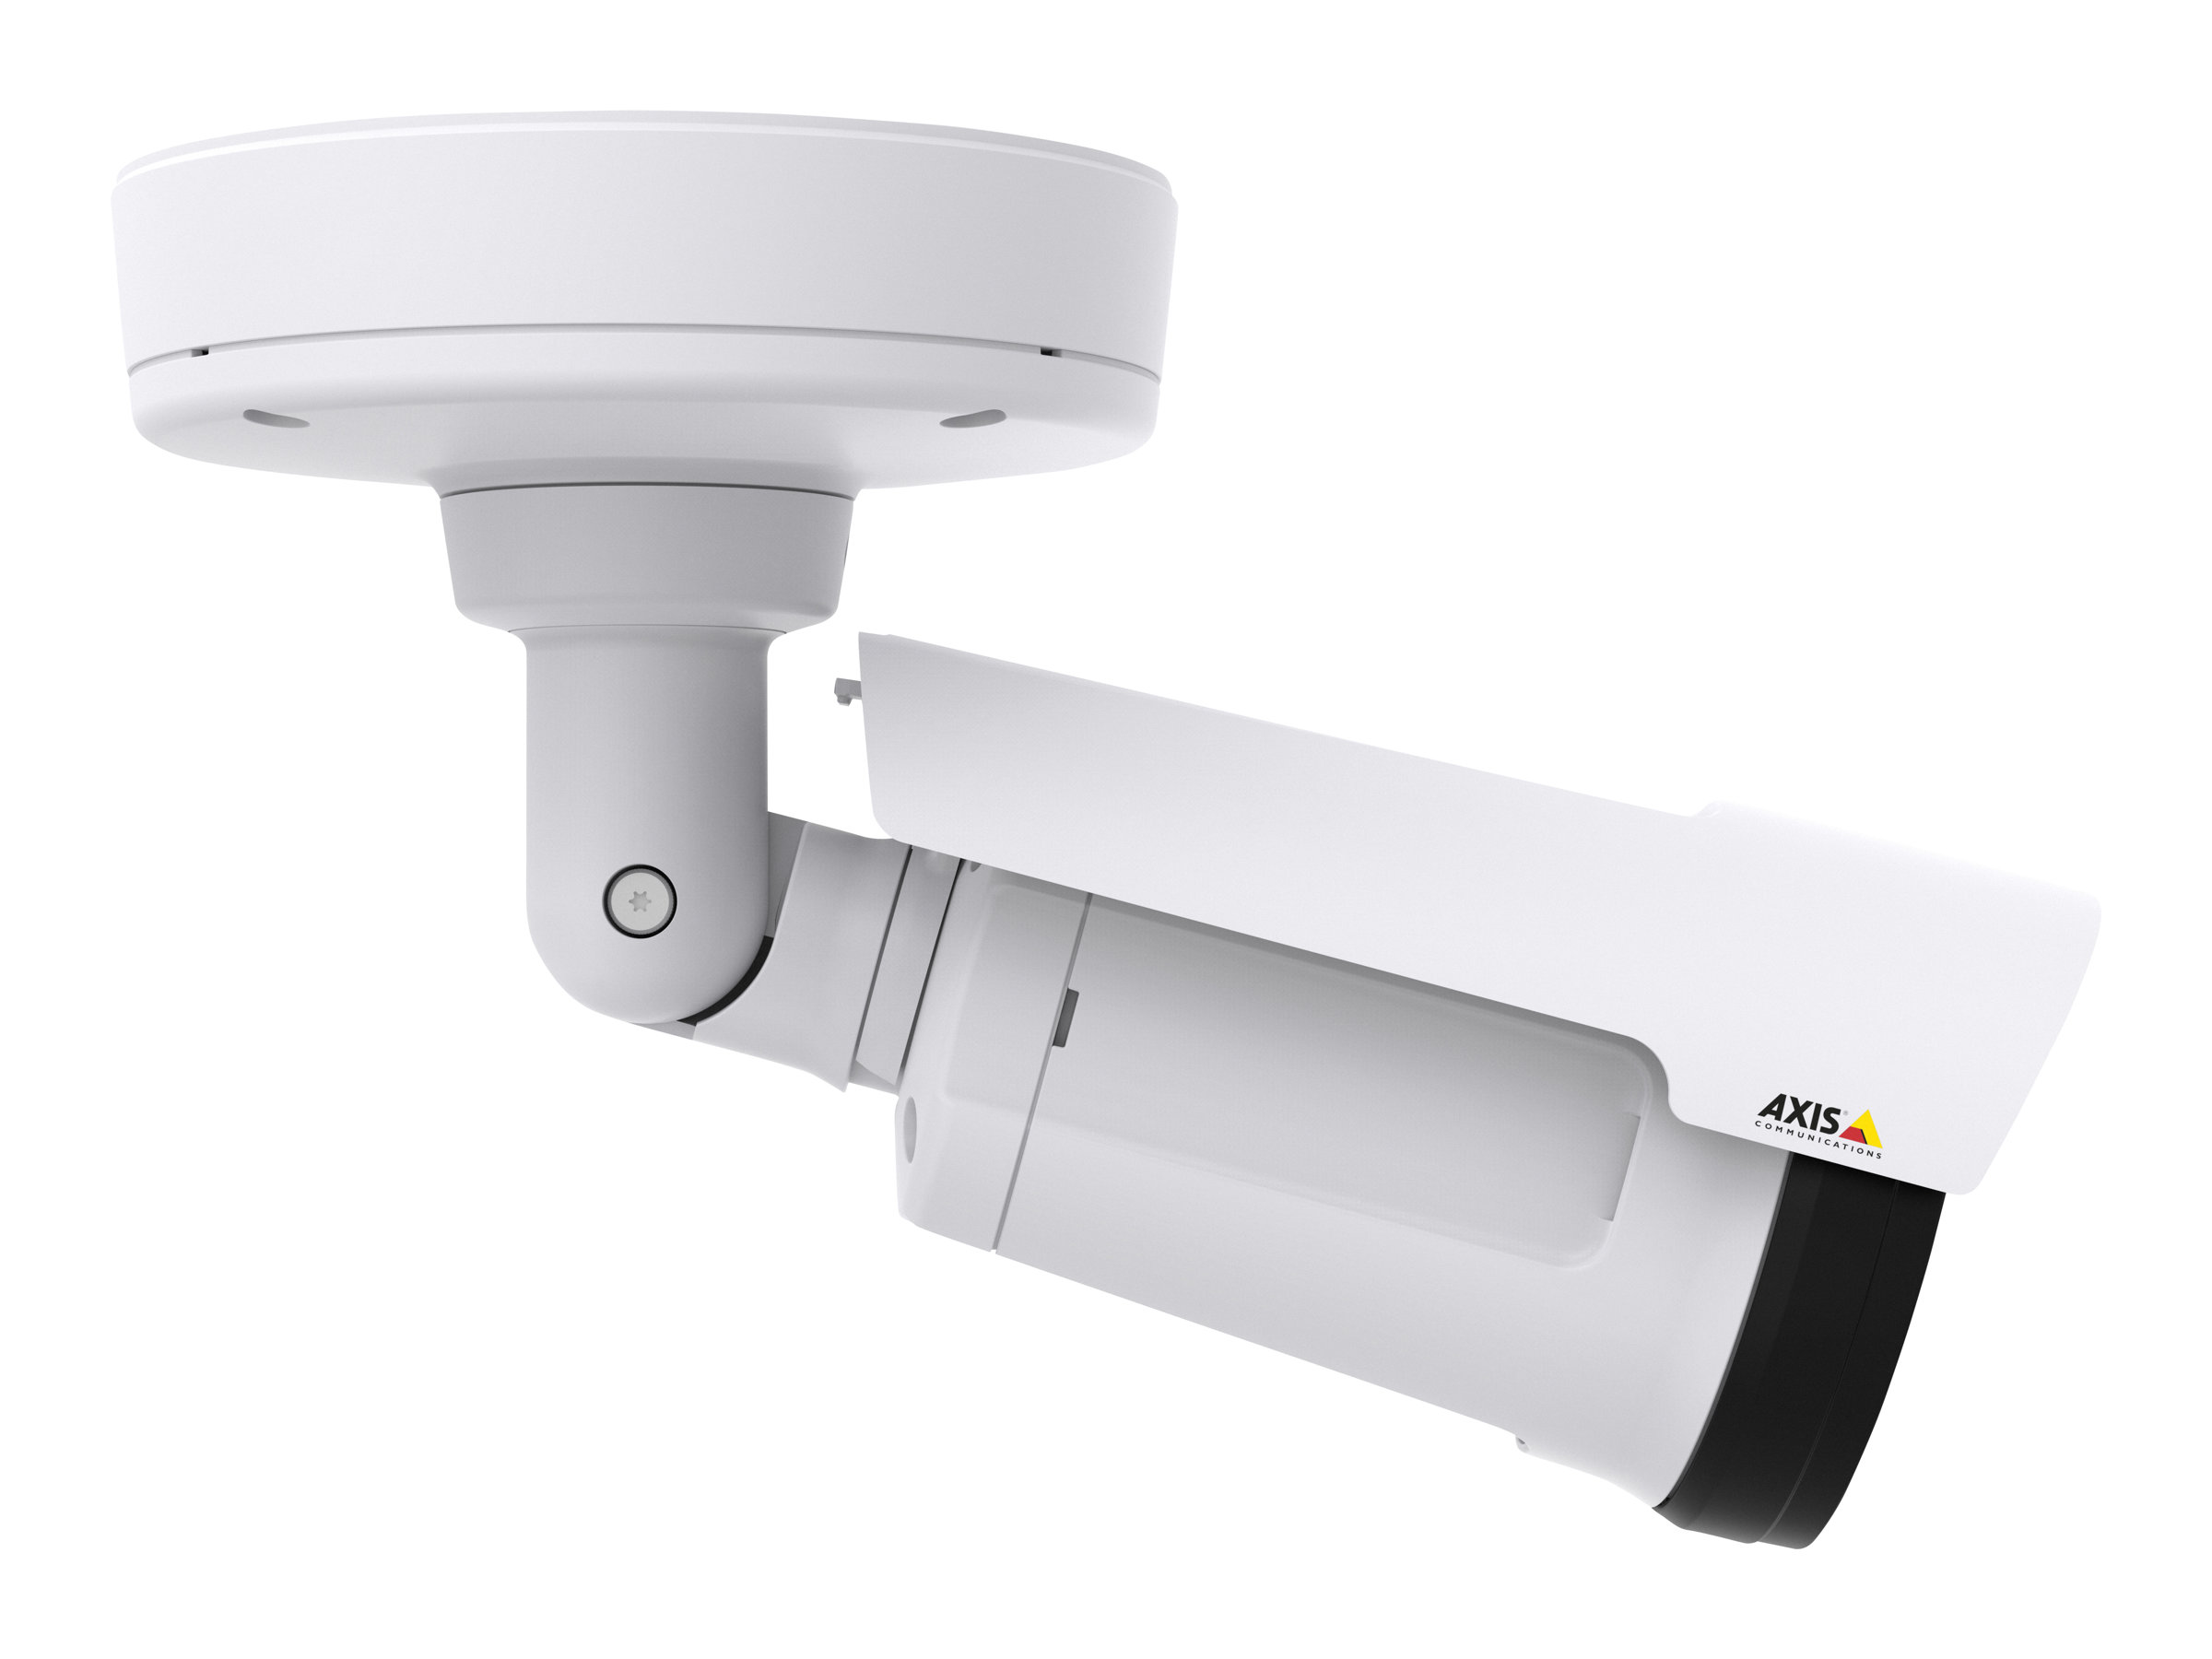 AXIS P1435-LE - Network surveillance camera | www.uk.shi.com